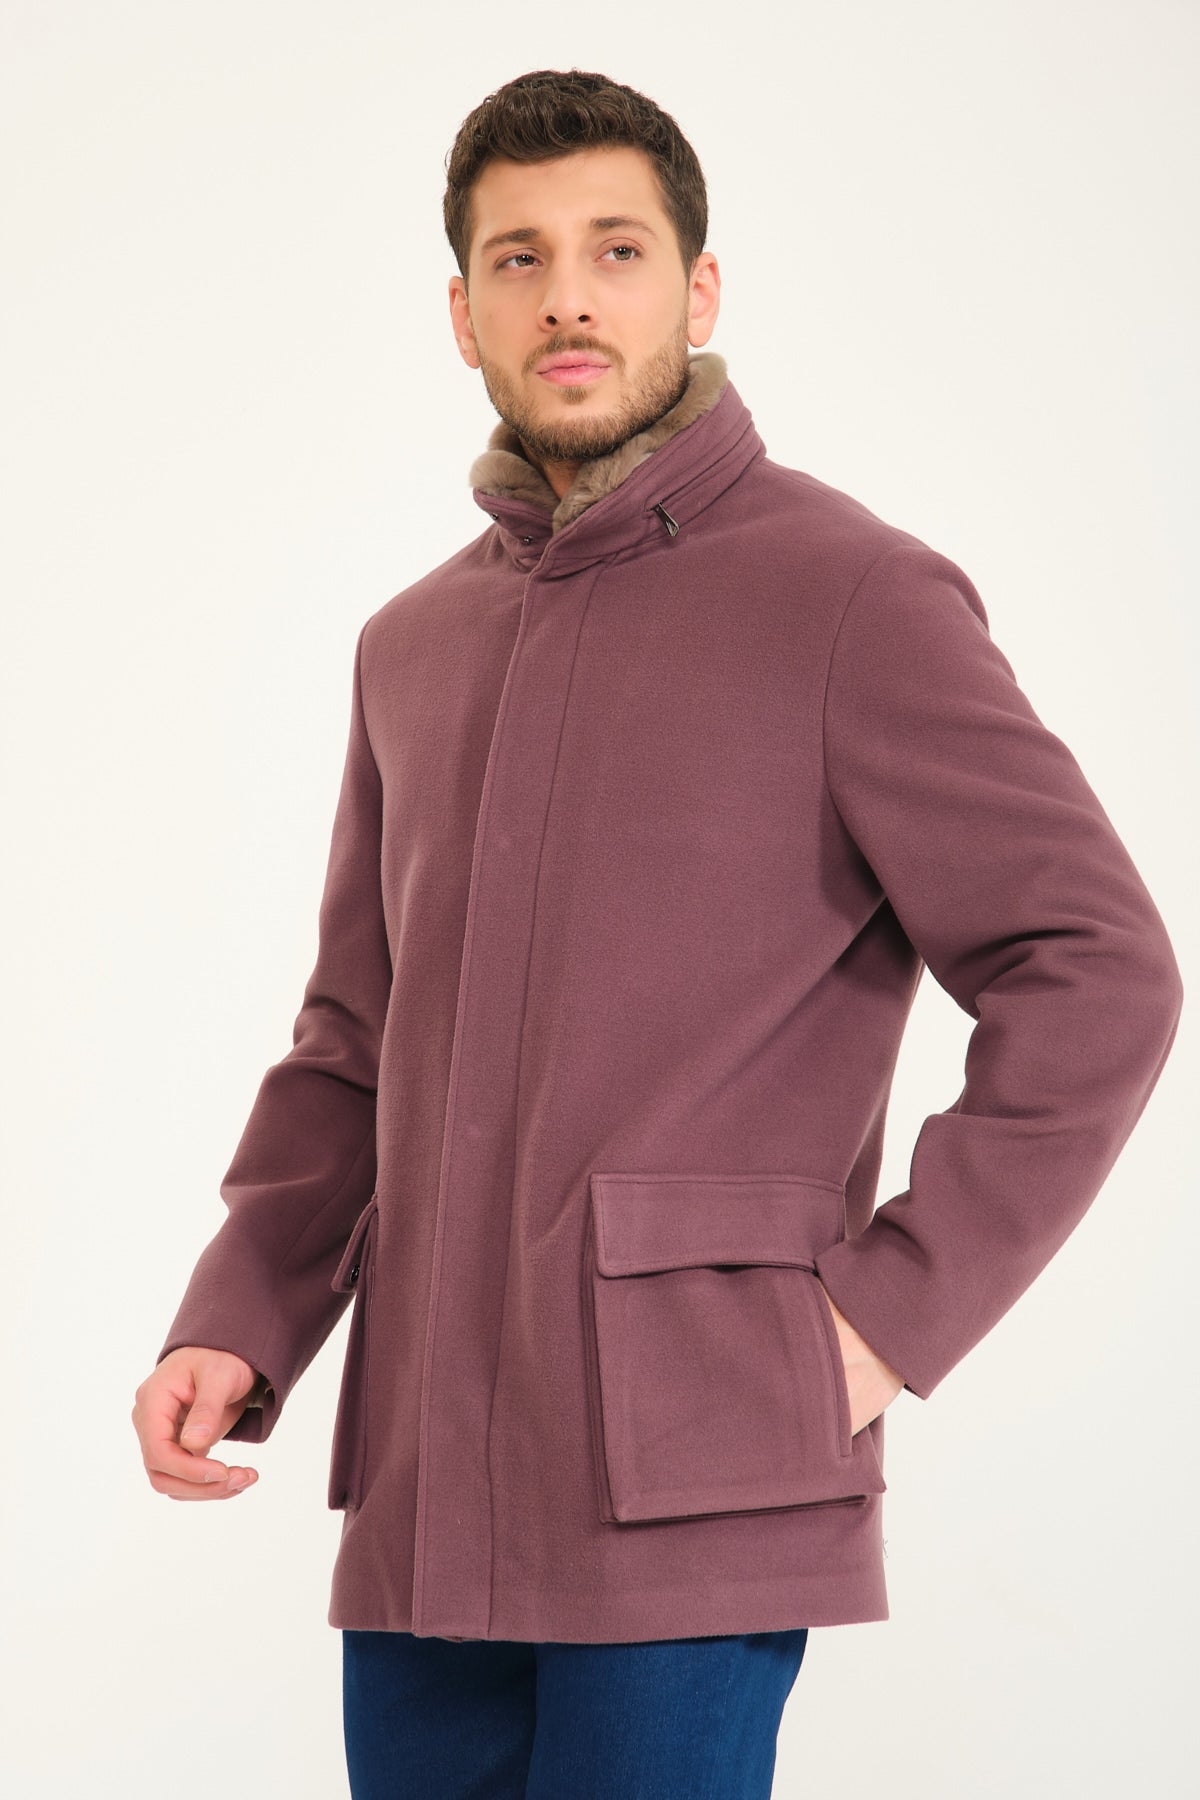 Burgundy Wool & Rex Fur Jacket